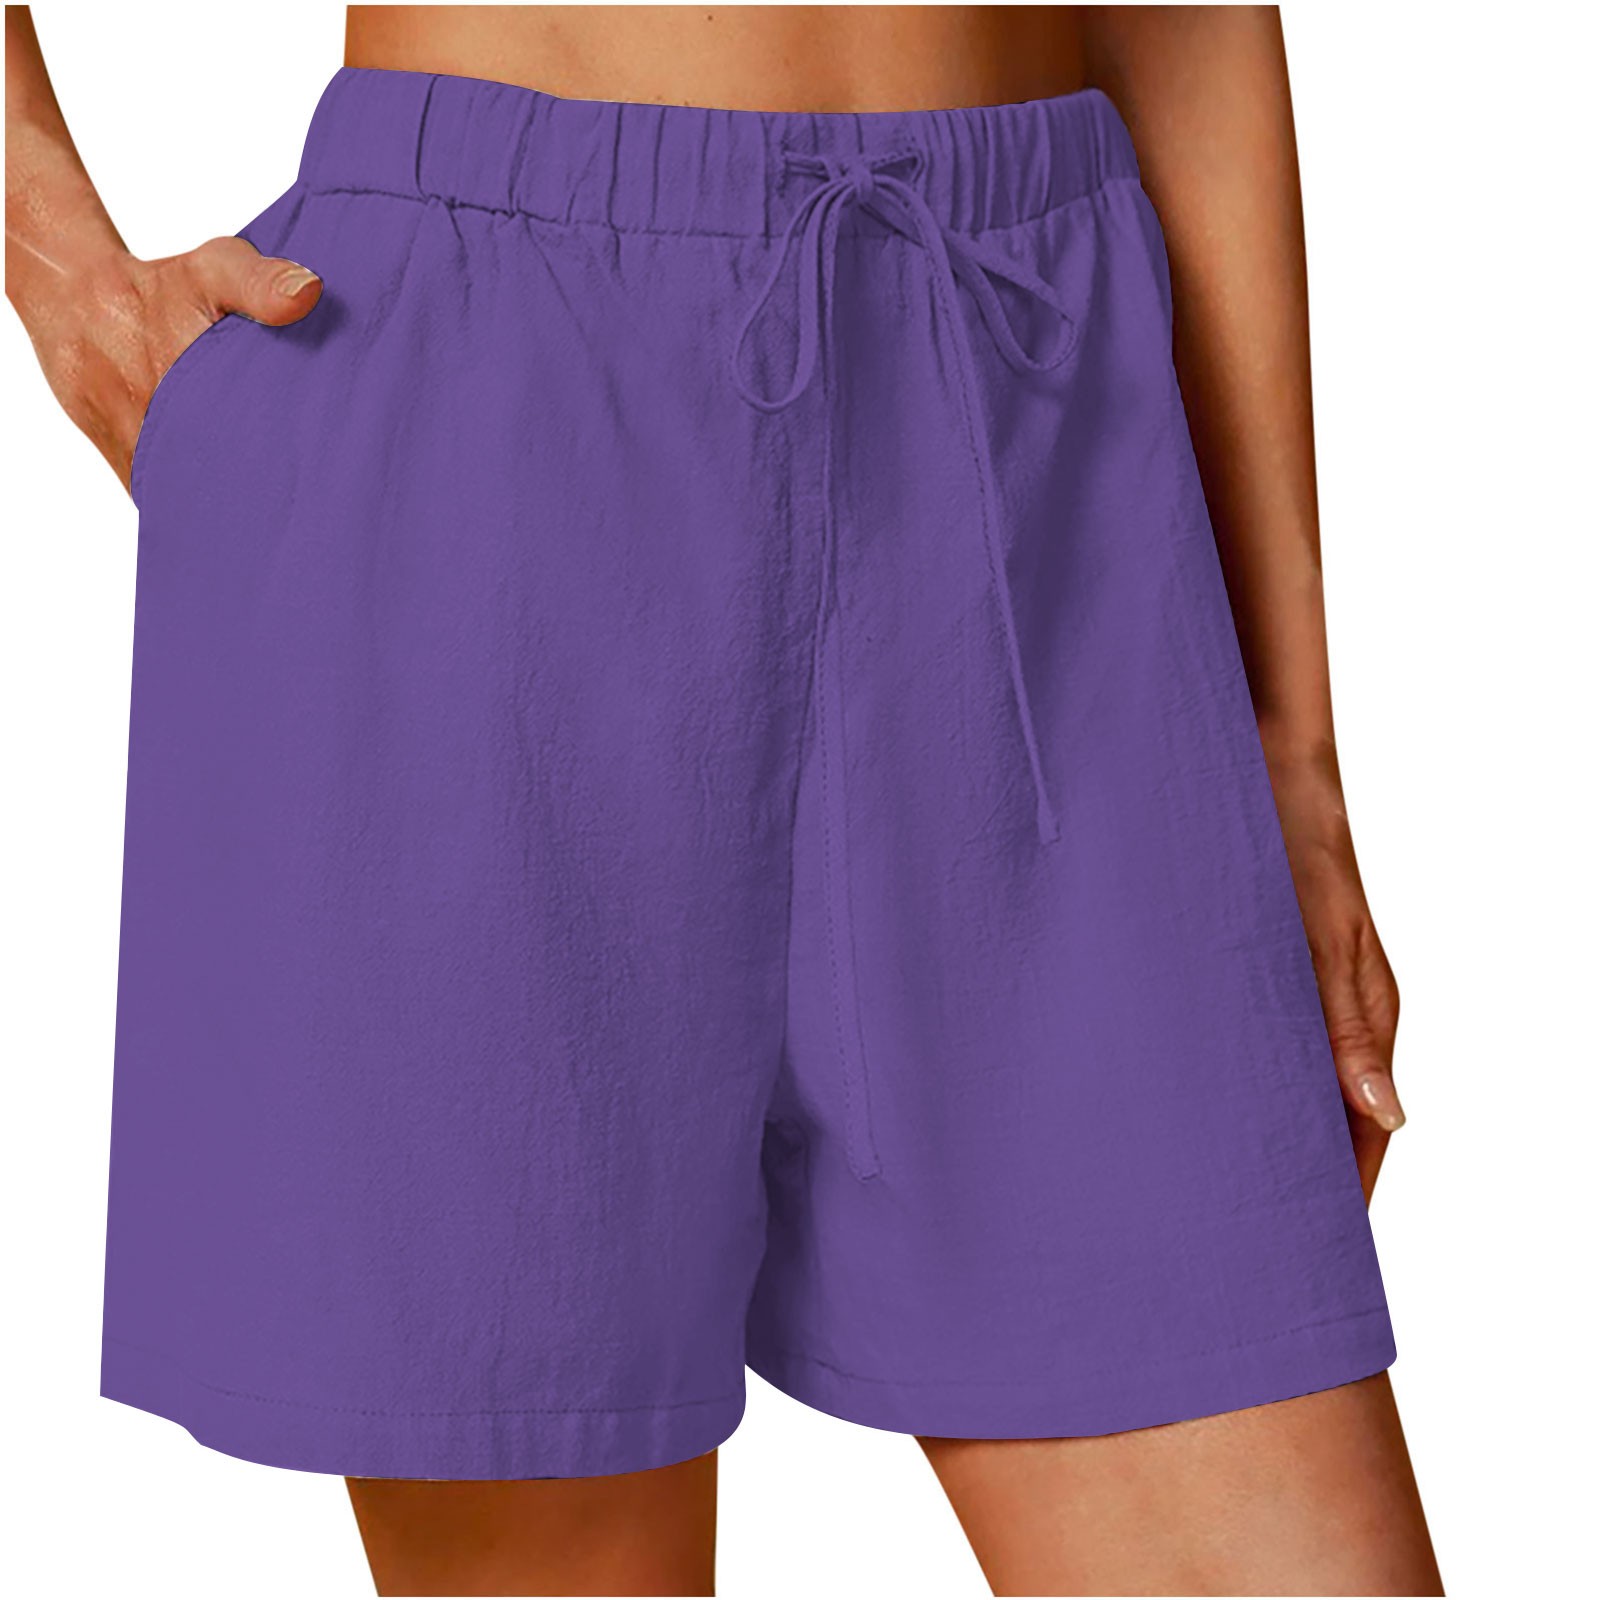 Njoeus Women's Cotton Linen Casual Shorts Drawstring Pull On Short ...